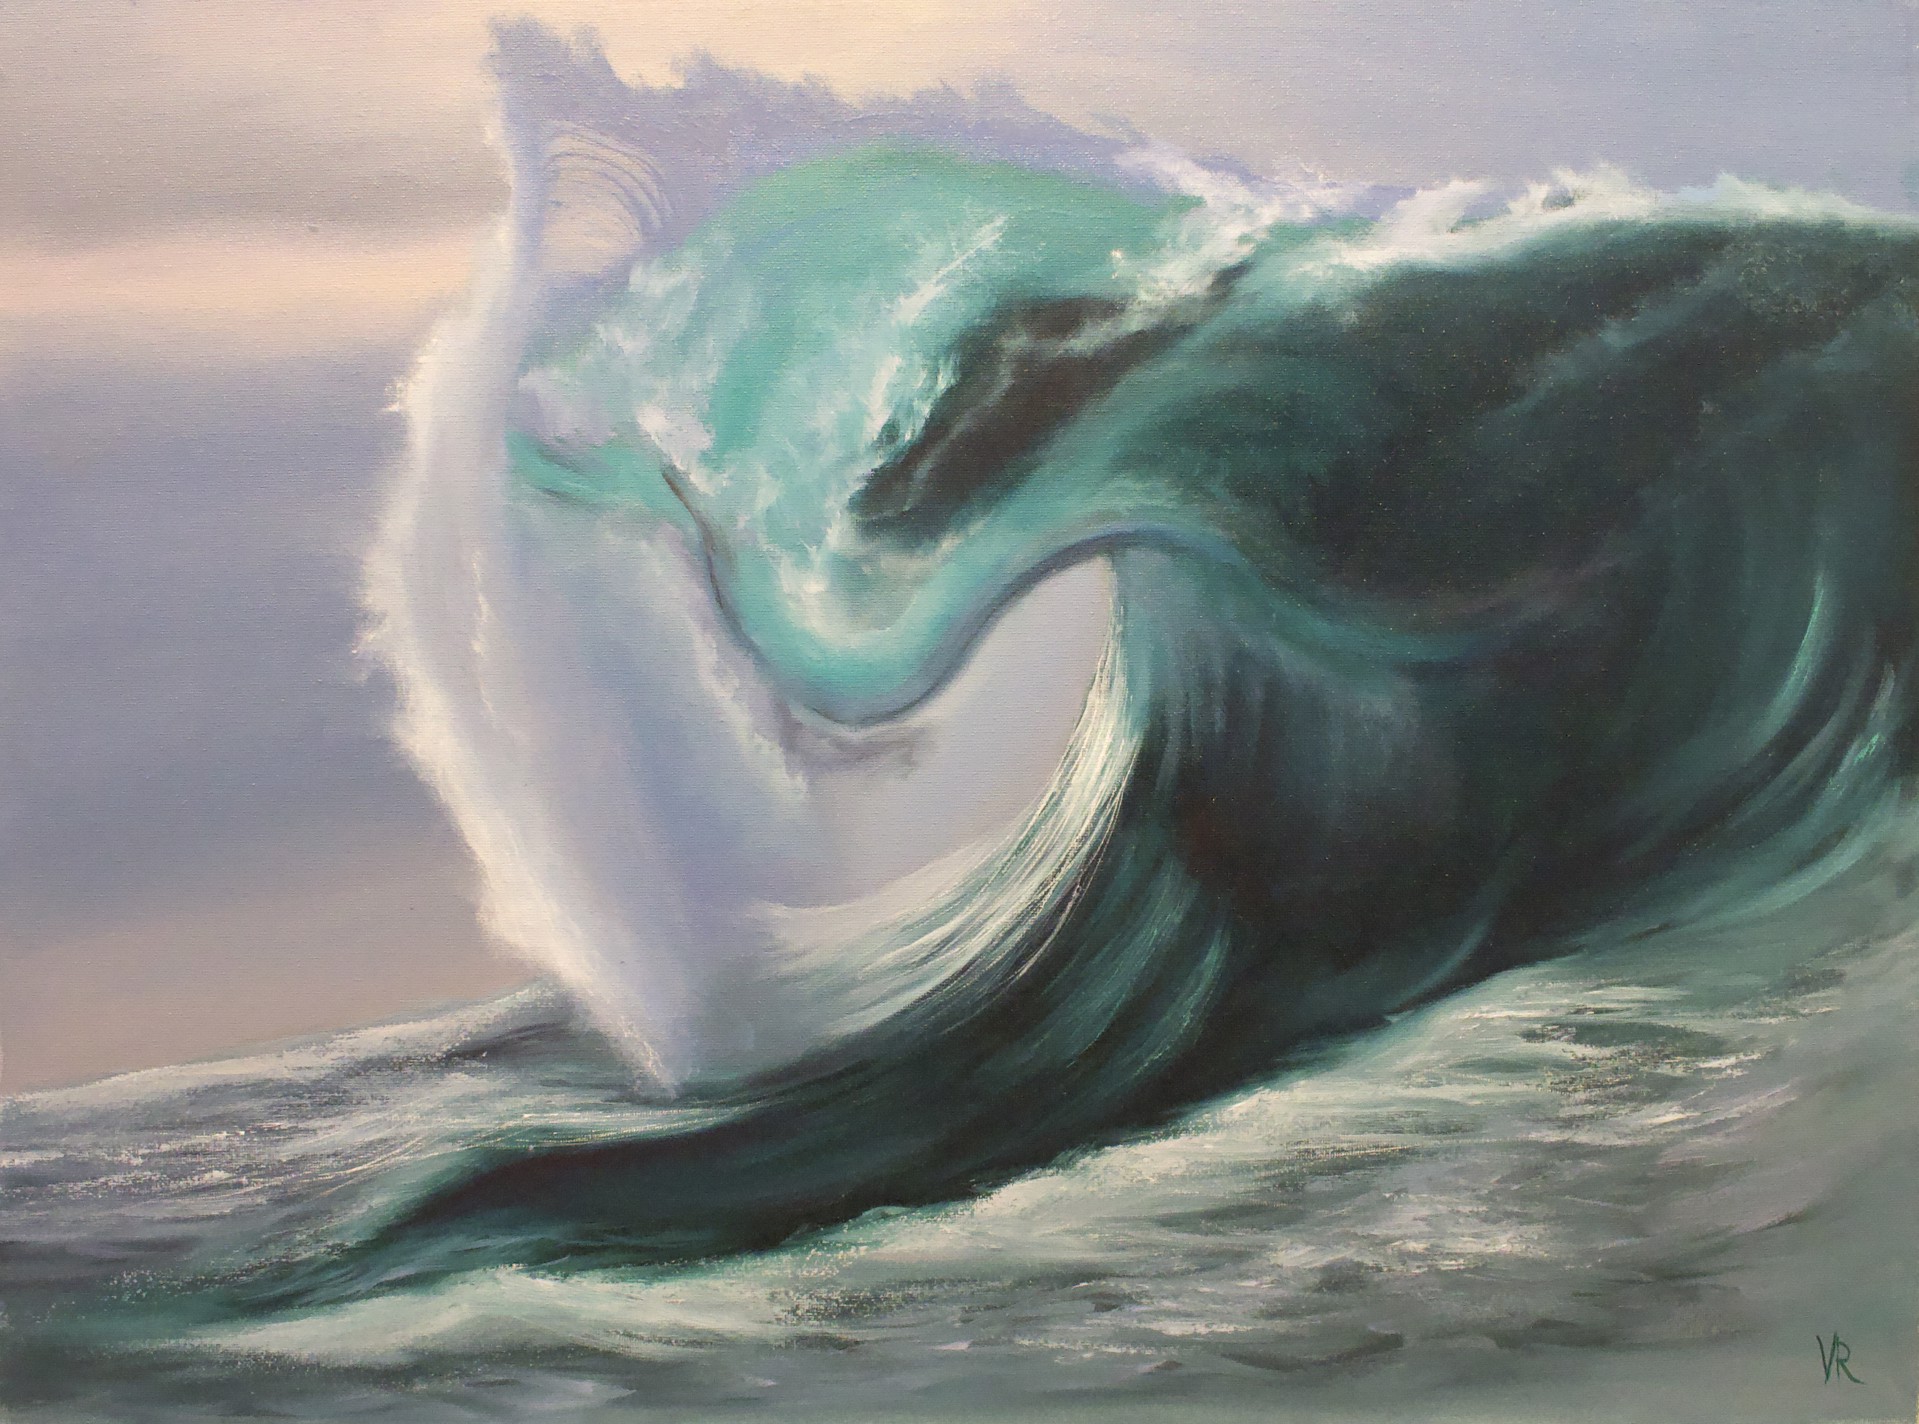 Storm by Ocean by Valentyna Rybkina